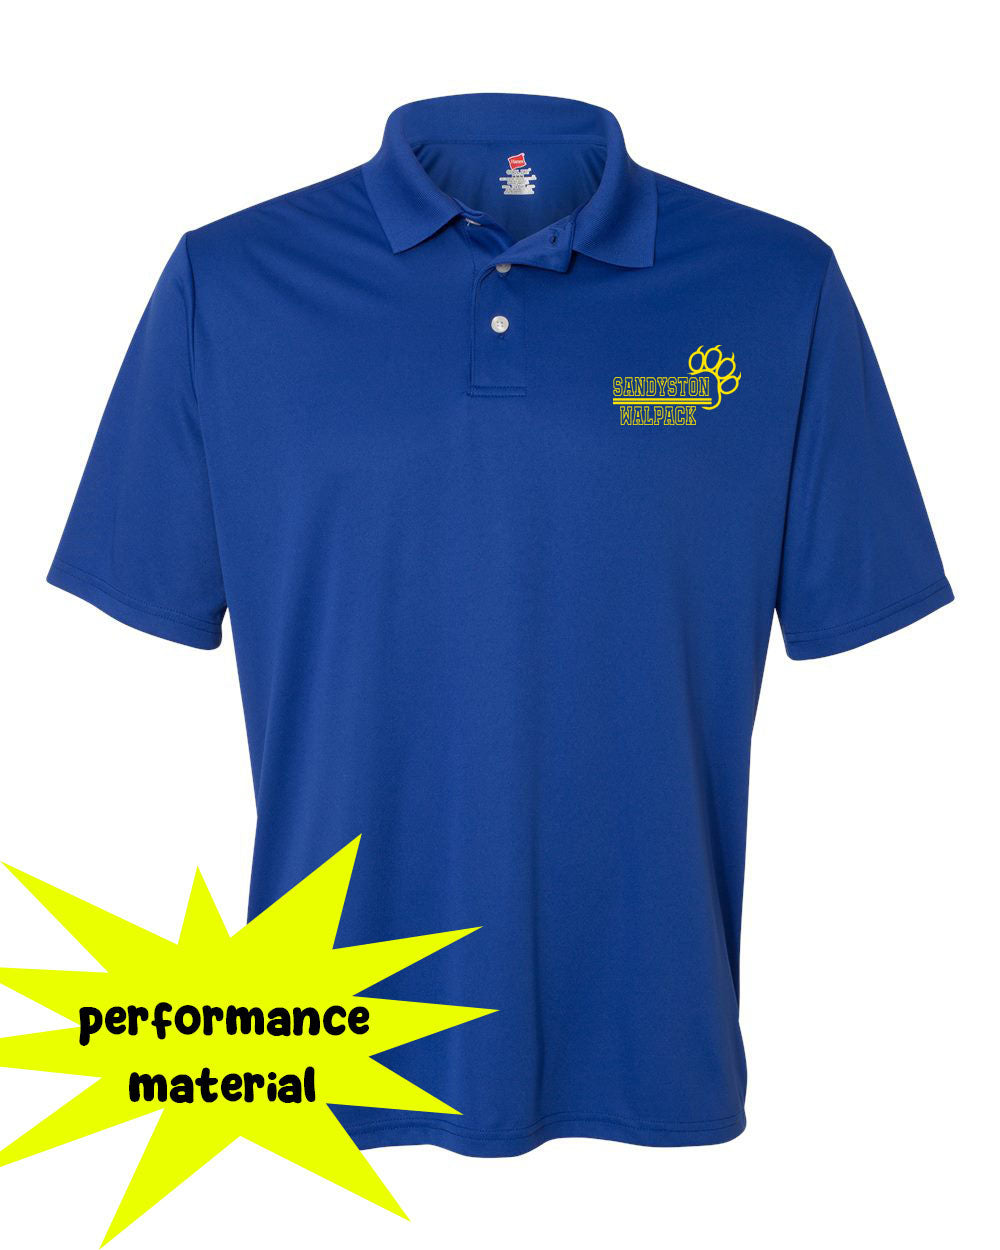 Sandyston Walpack Design 16 Performance Material Polo T-Shirt